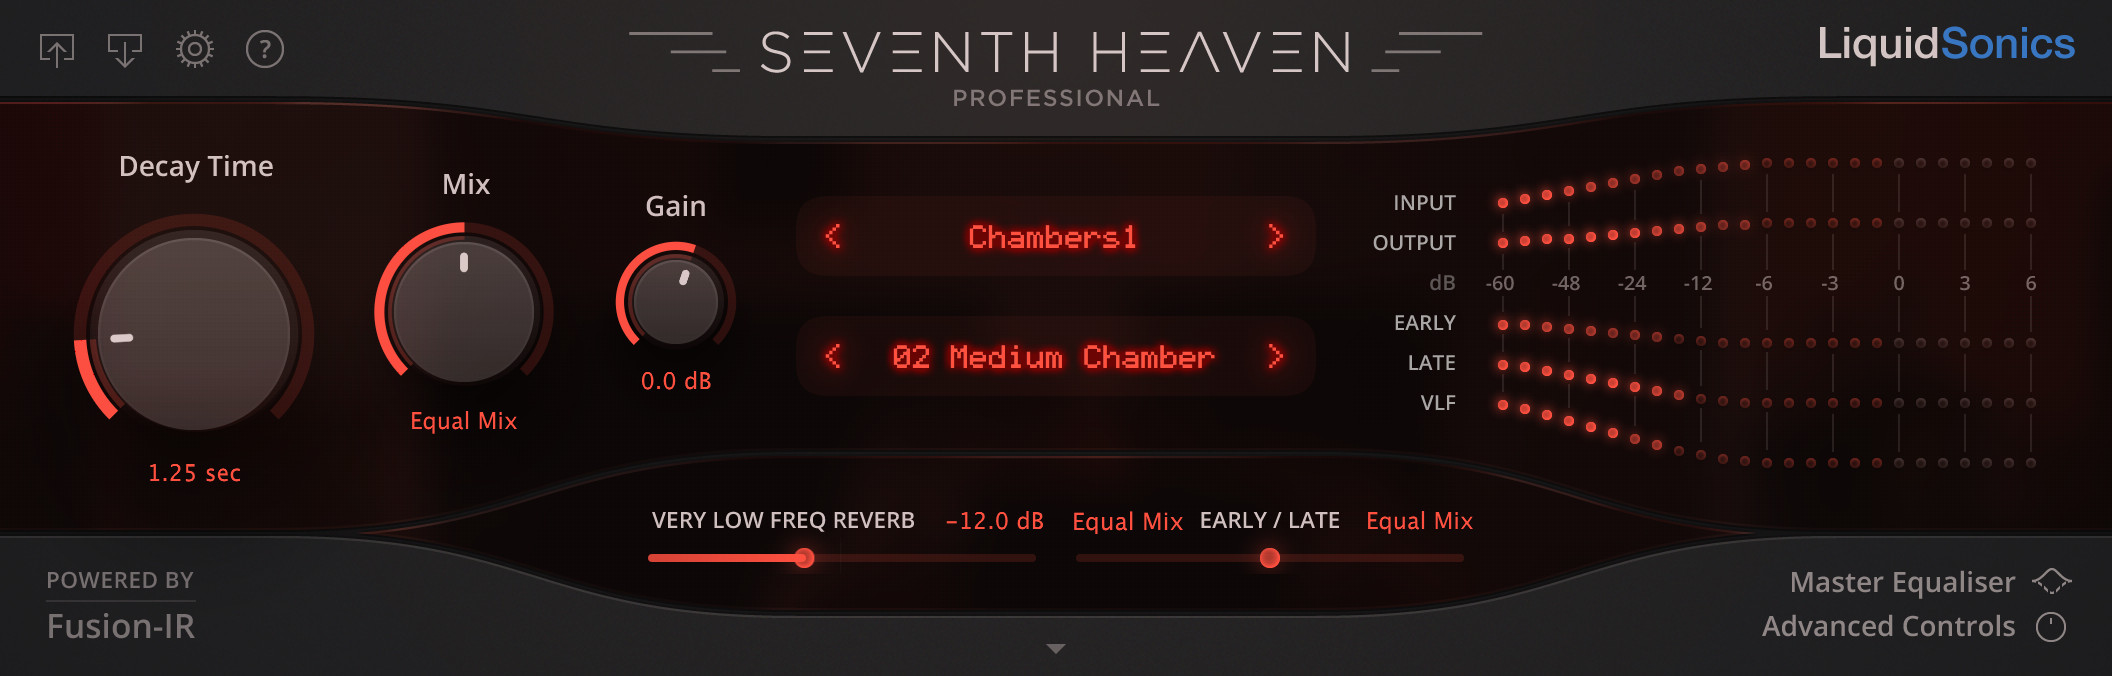 Seventh Heaven Professional